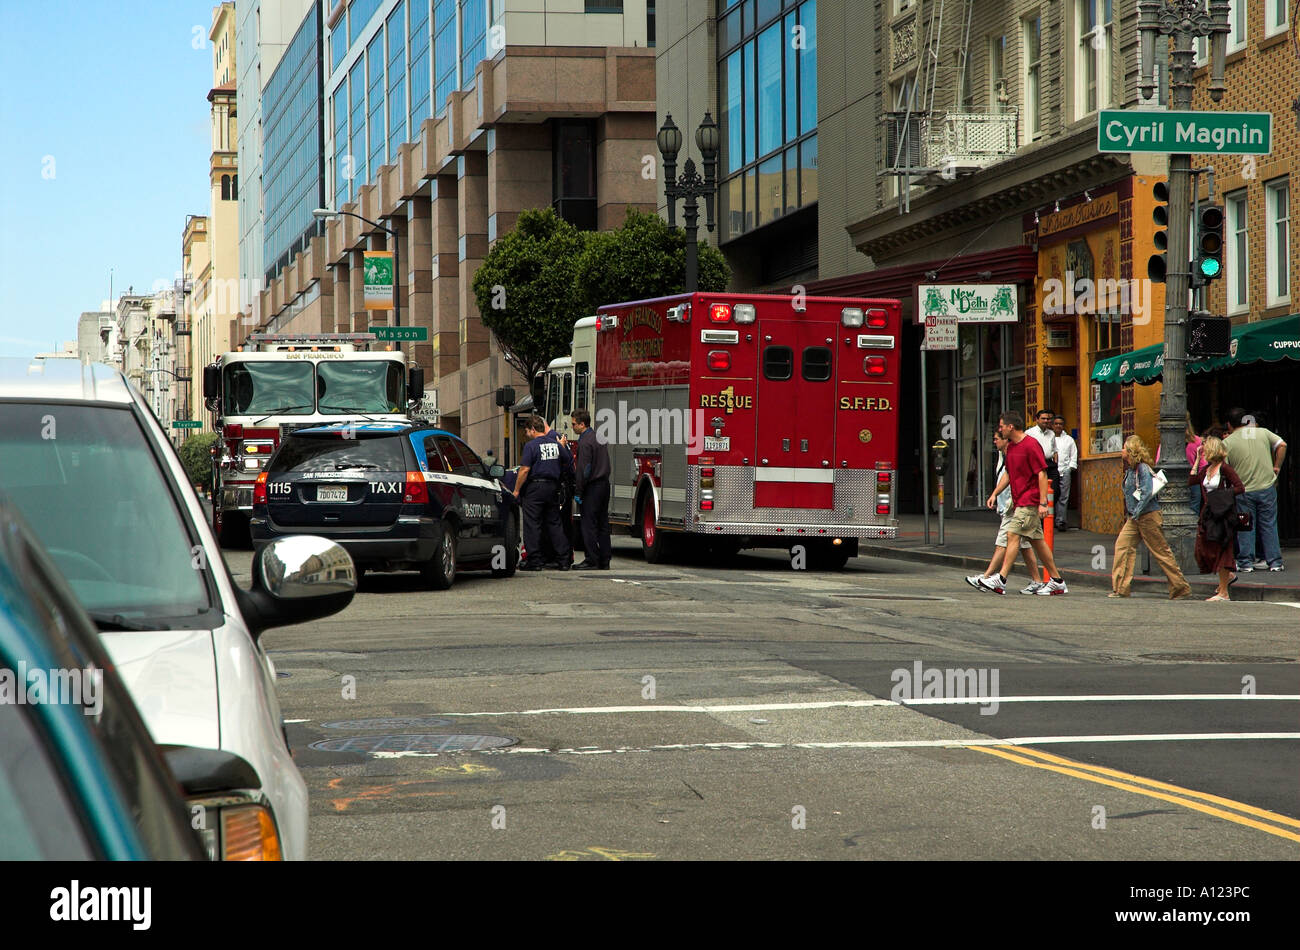 Road traffic accident on Cyril Magnin and Ellis Street, San Francisco, California, USA Stock Photo